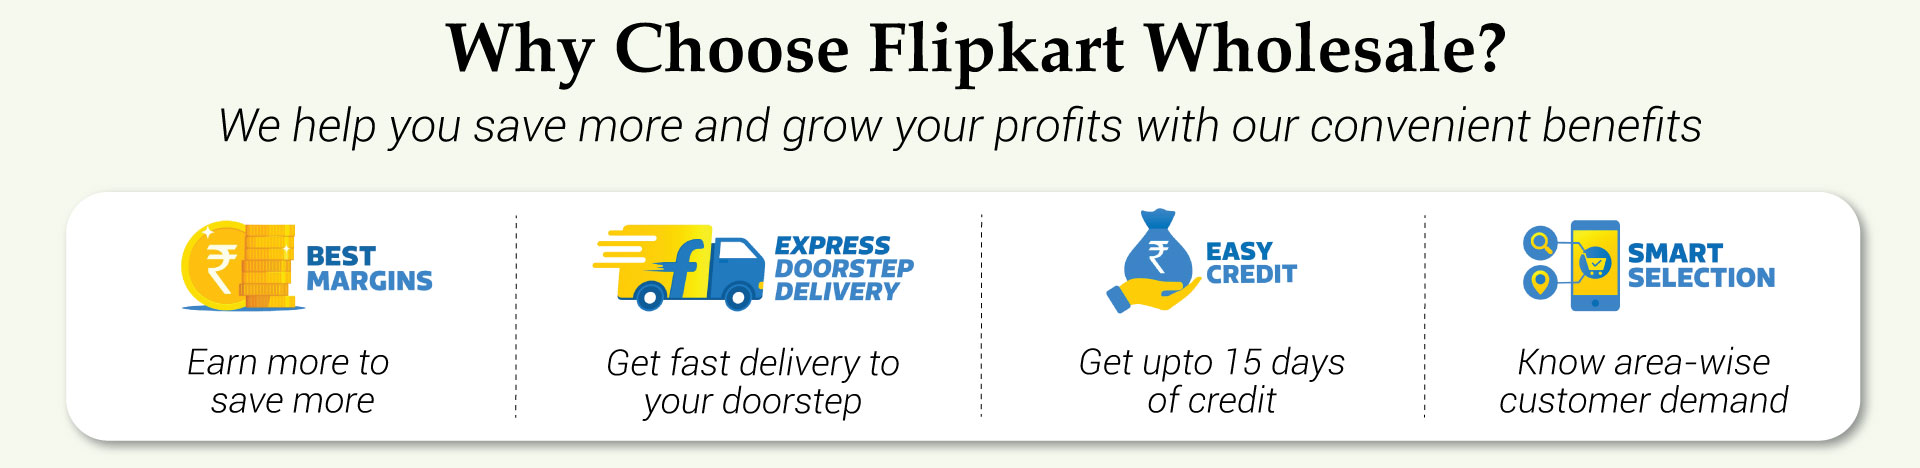 Why choose Flipkart wholesale?